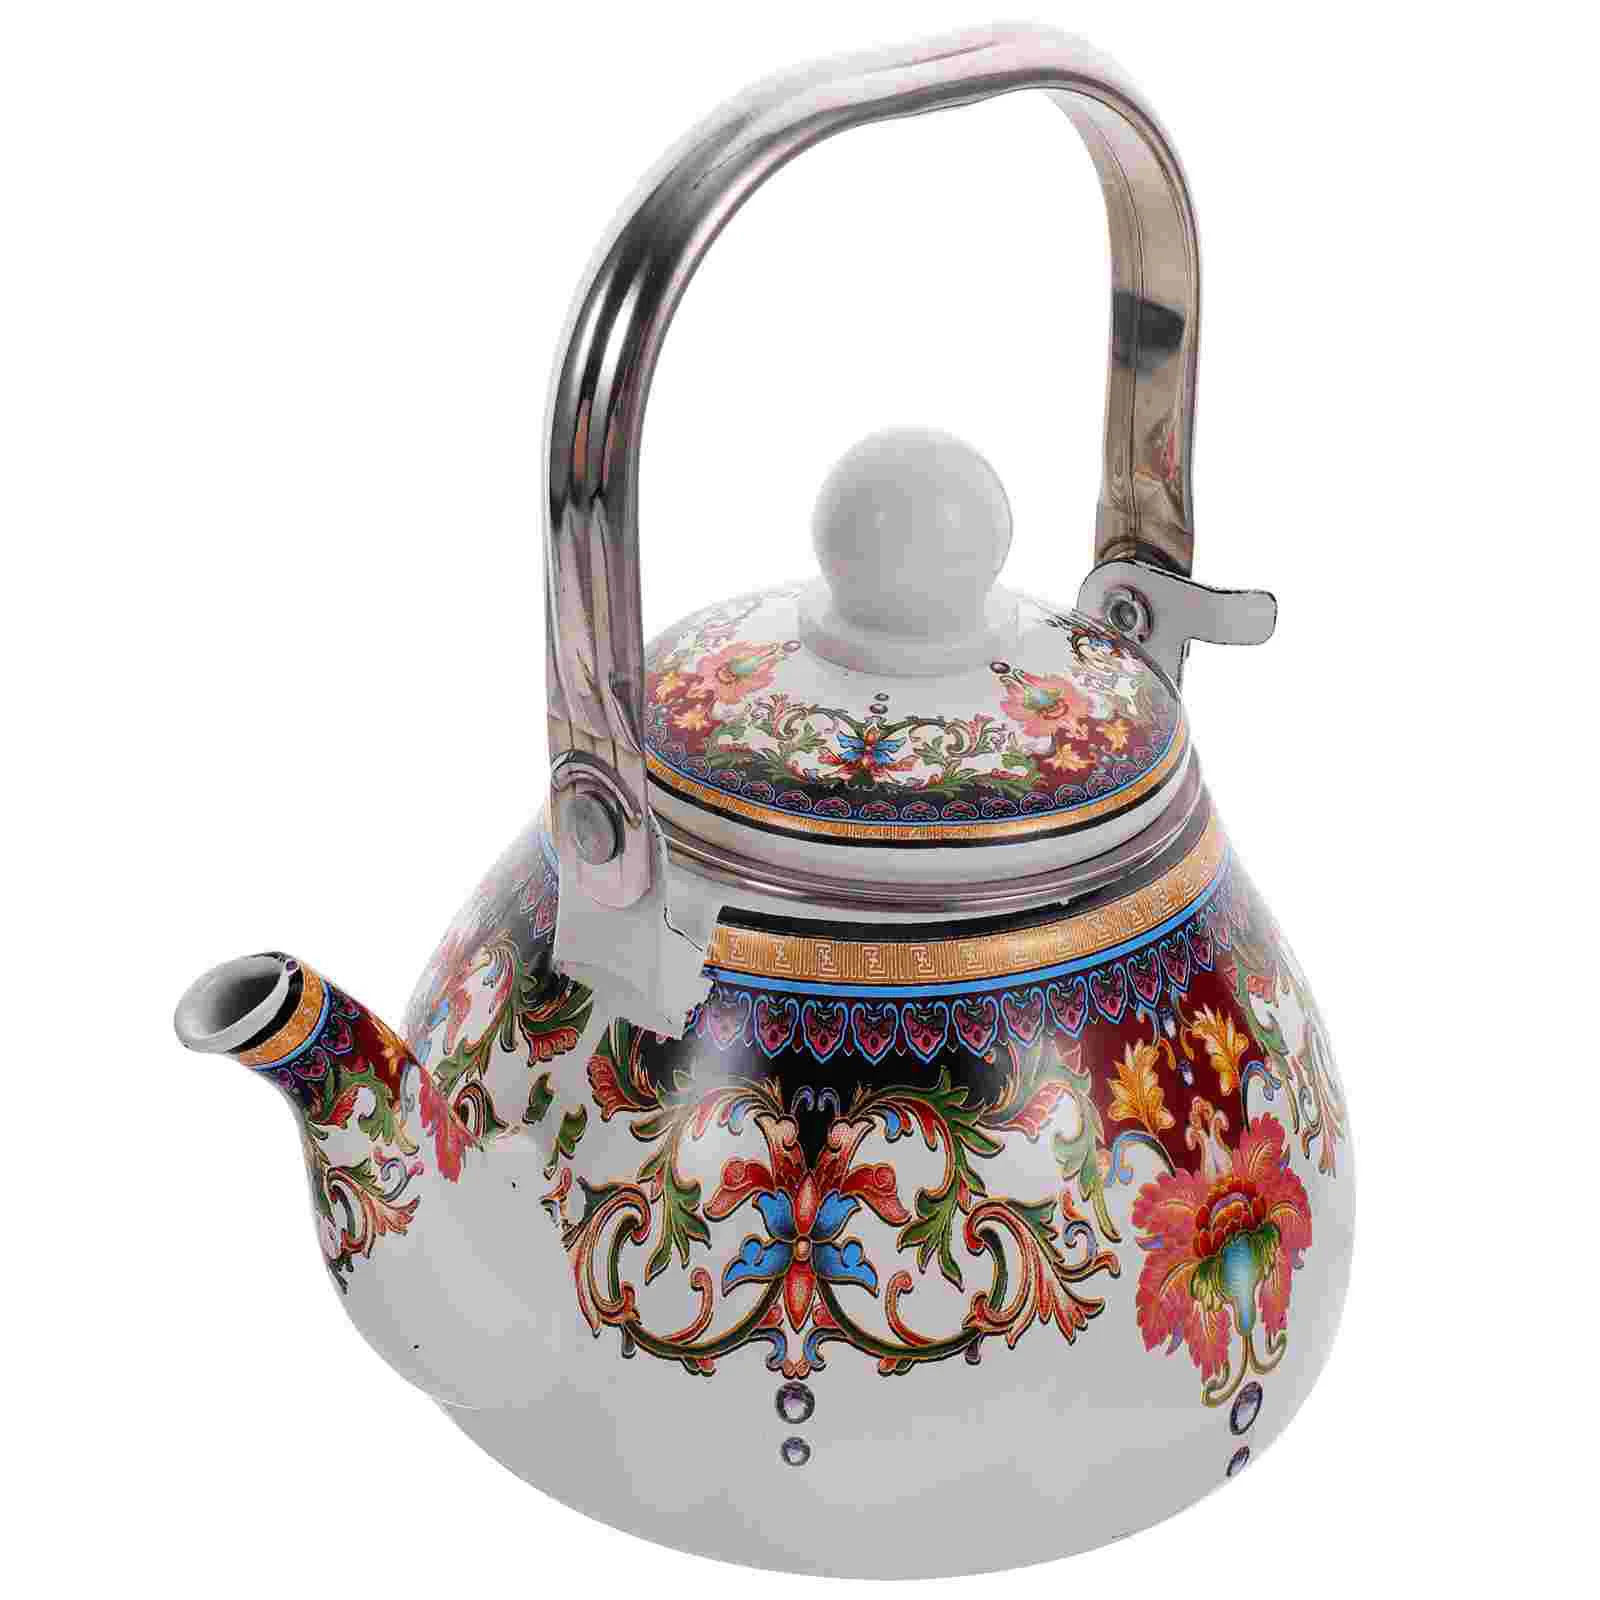 Enamel Teapot Kettle Large Portable Household Serving Teakettle for Loose Kungfu Enameled